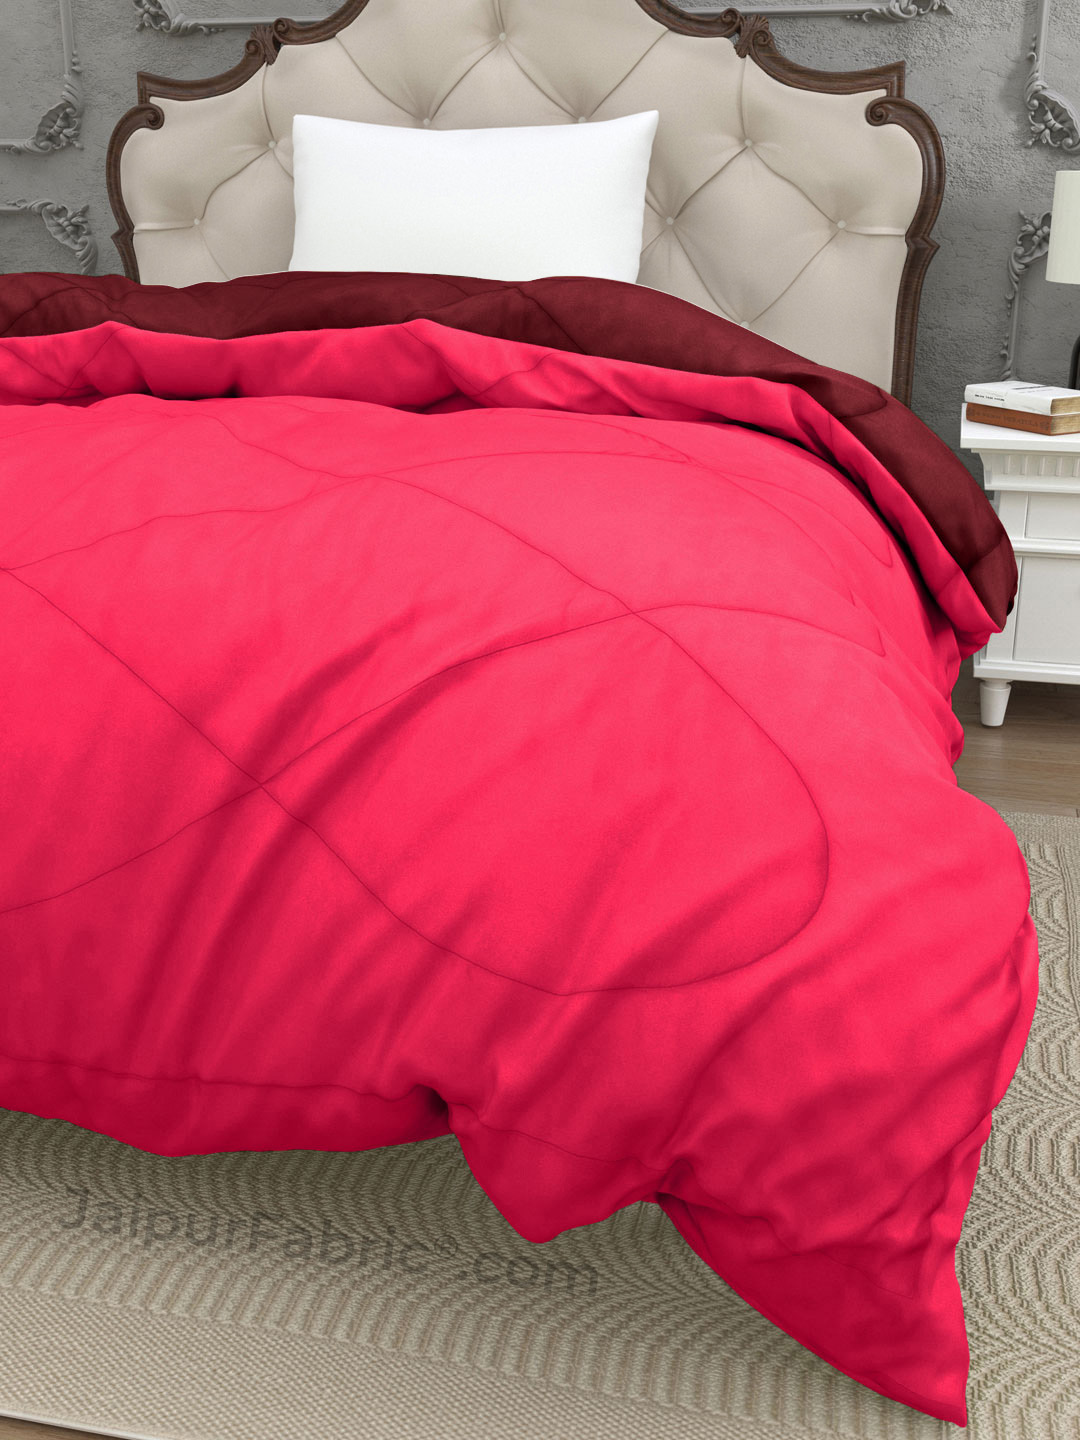 Maroon - Pink Single Bed Comforter